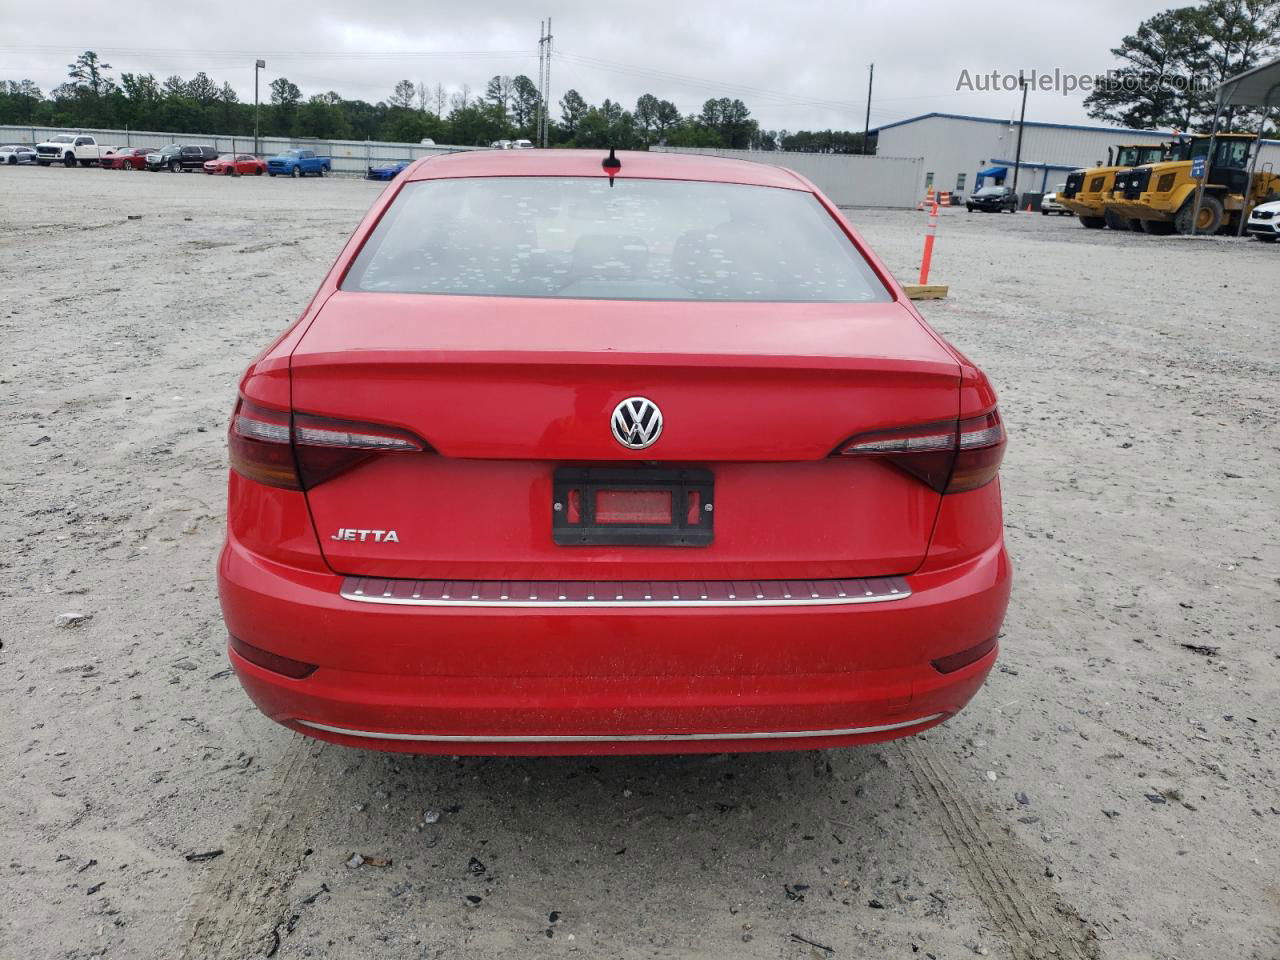 2019 Volkswagen Jetta S Red vin: 3VWC57BUXKM122837